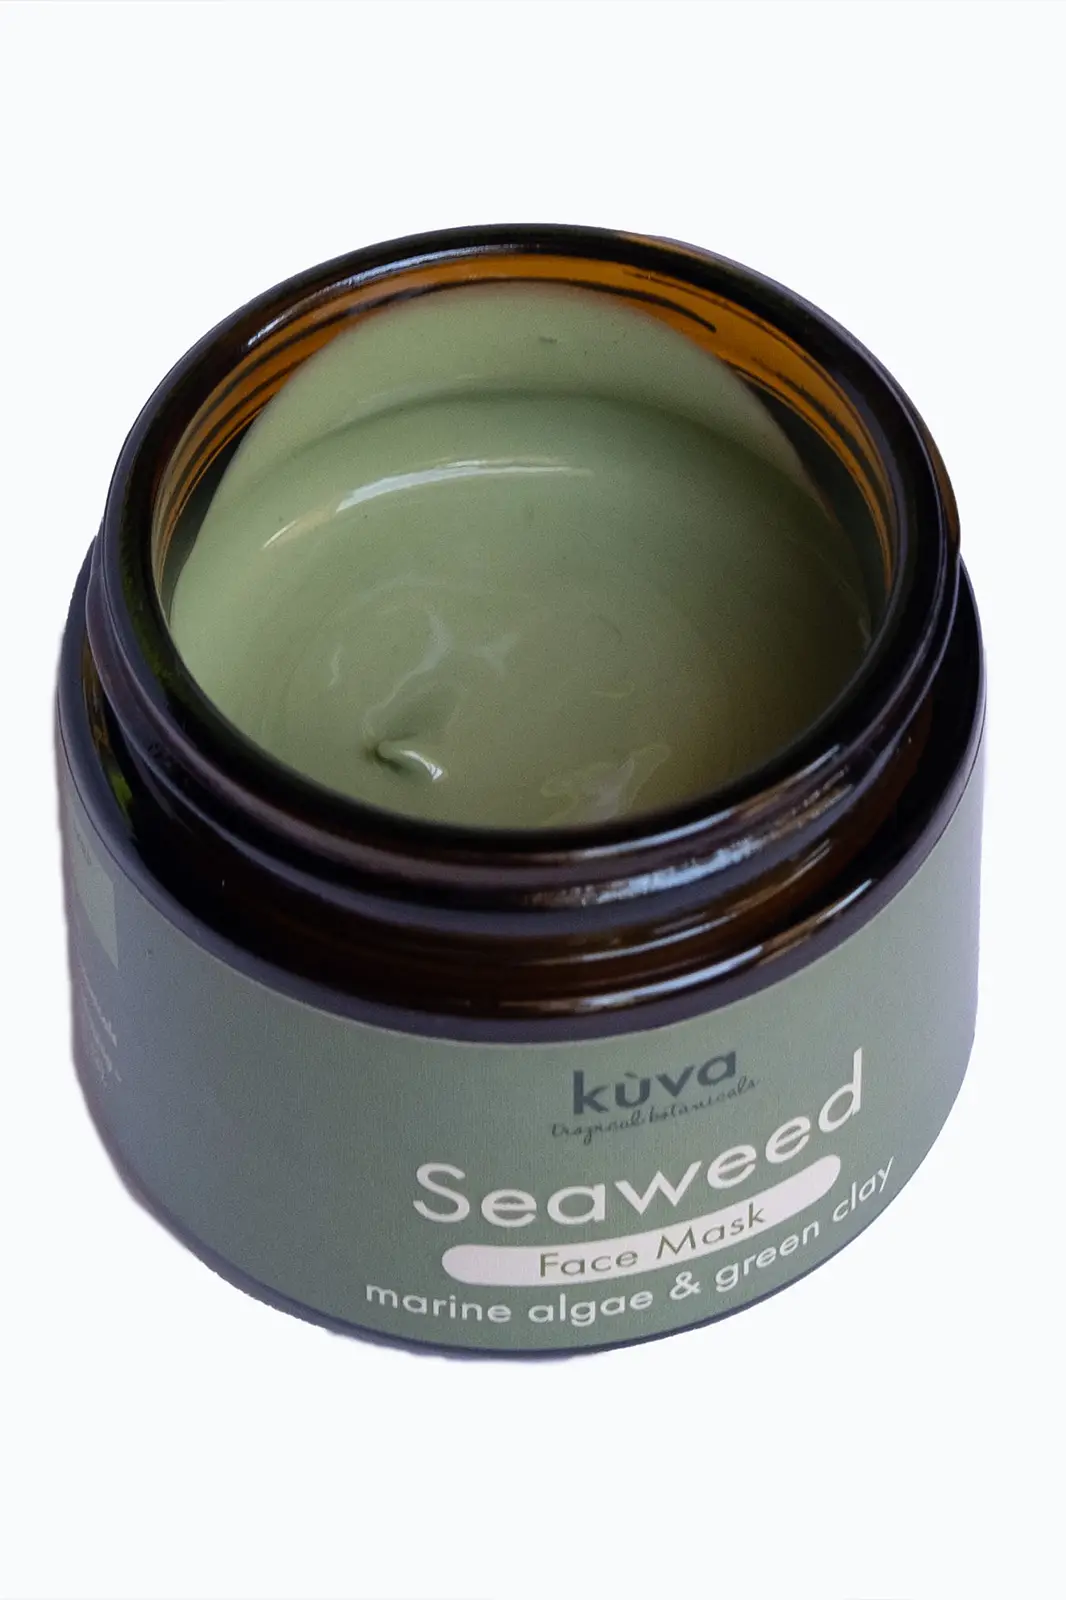 Seaweed green clay marine algae extract face mask, seaweed green clay face mask, seaweed face mask, clay face pack, clay face mask green, Kùva Botanicals